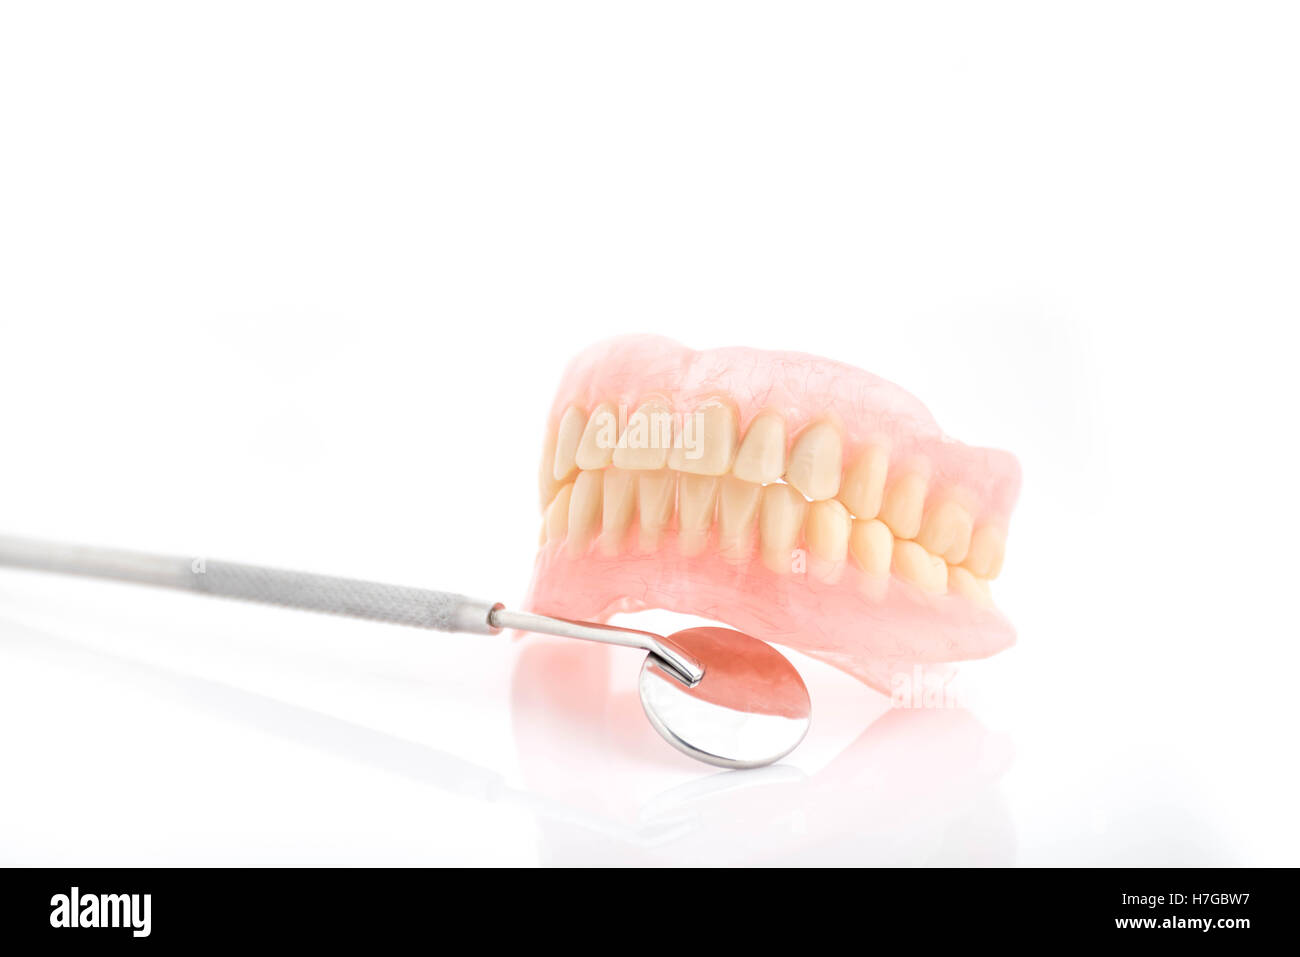 Tatar on dentures and dental mirror pn white background Stock Photo